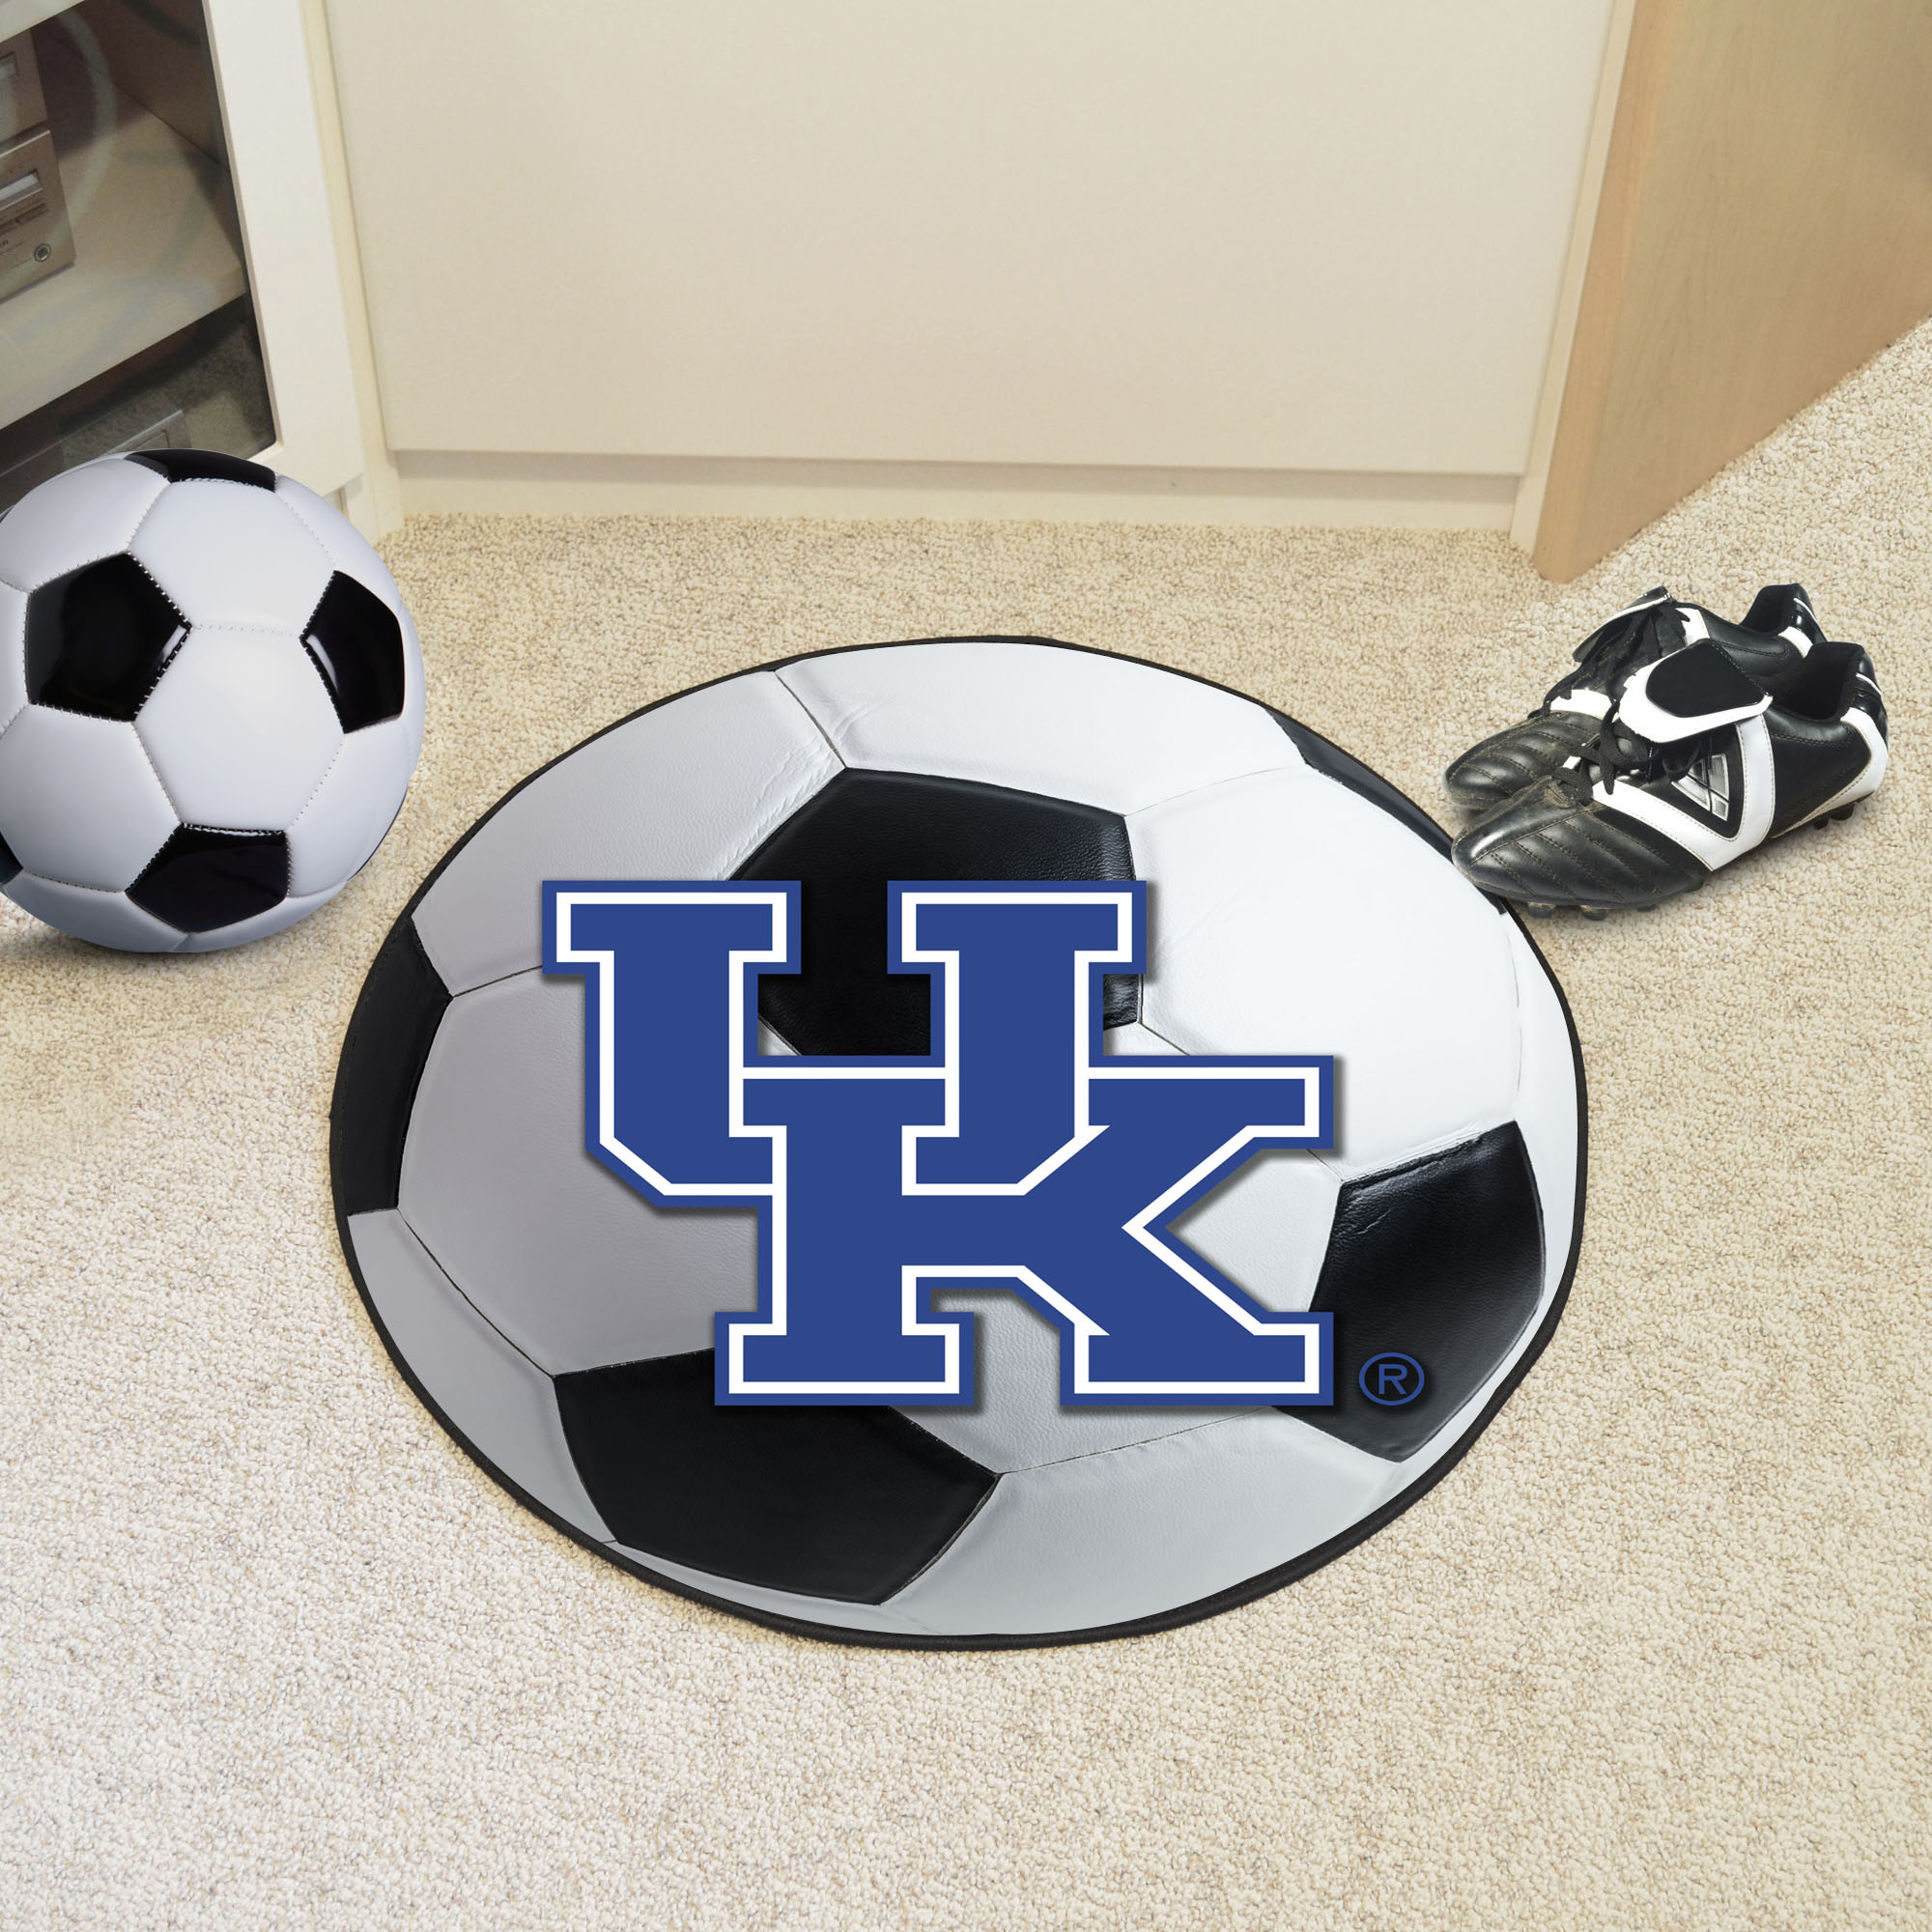 University of Kentucky Ball Shaped Area Rugs - UK Logo (Ball Shaped Area Rugs: Soccer Ball)